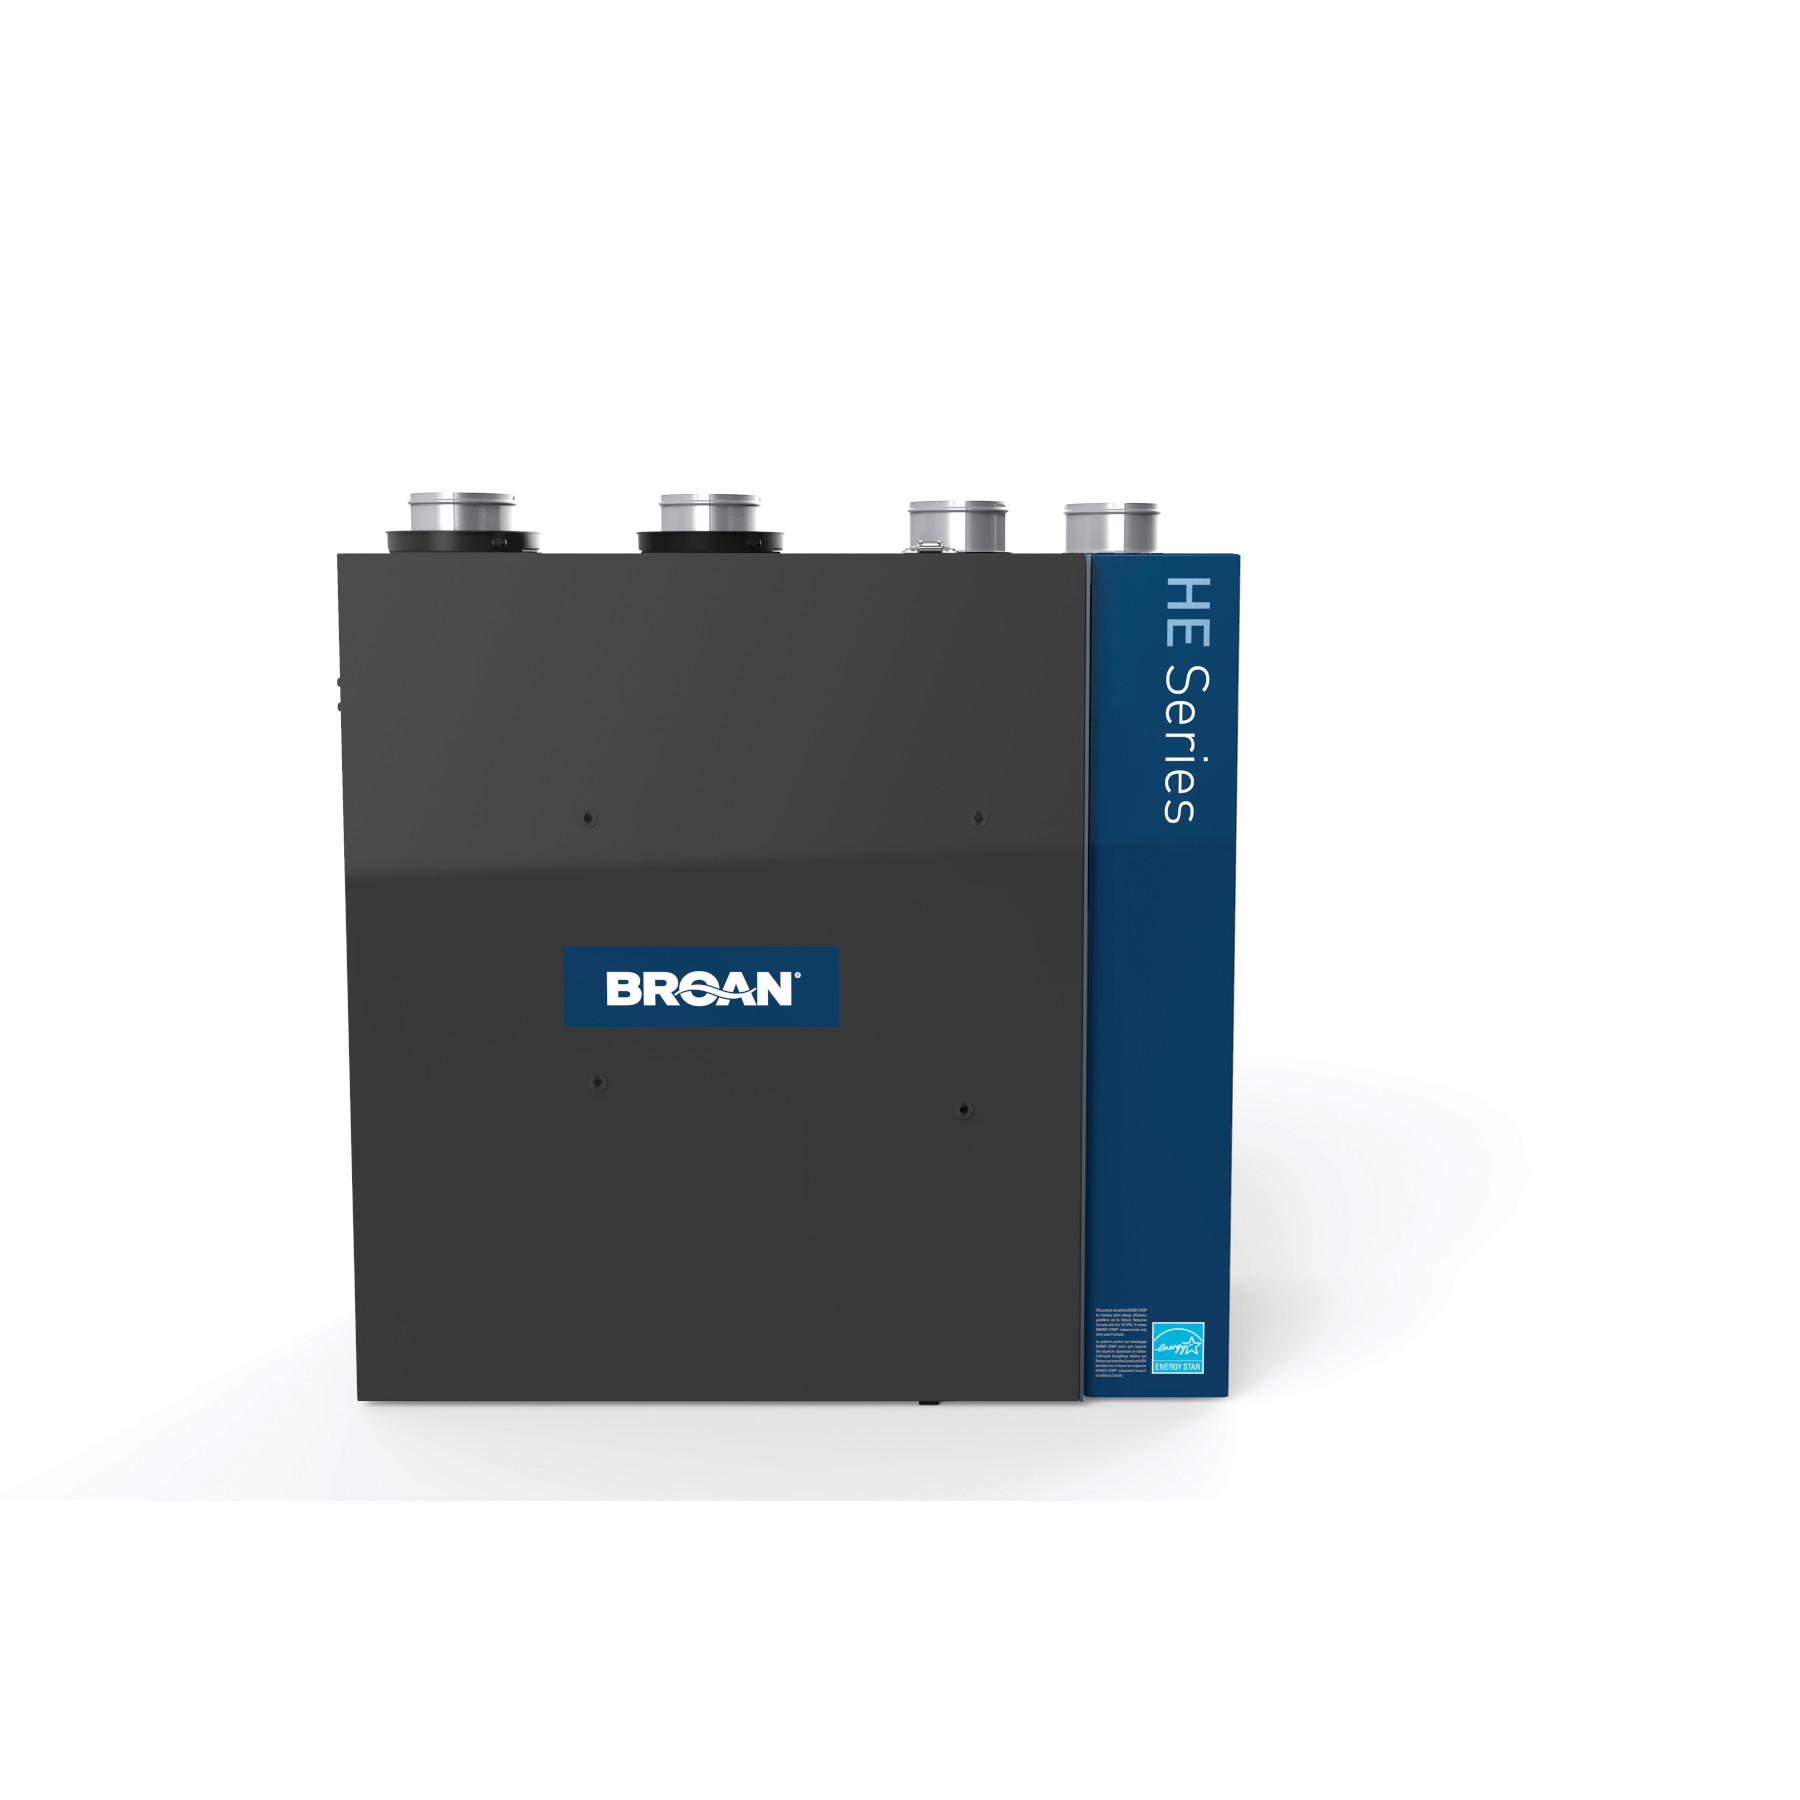 Broan® HE Series High Efficiency Heat Recovery Ventilator, 226 CFM at 0.4 in. w.g.